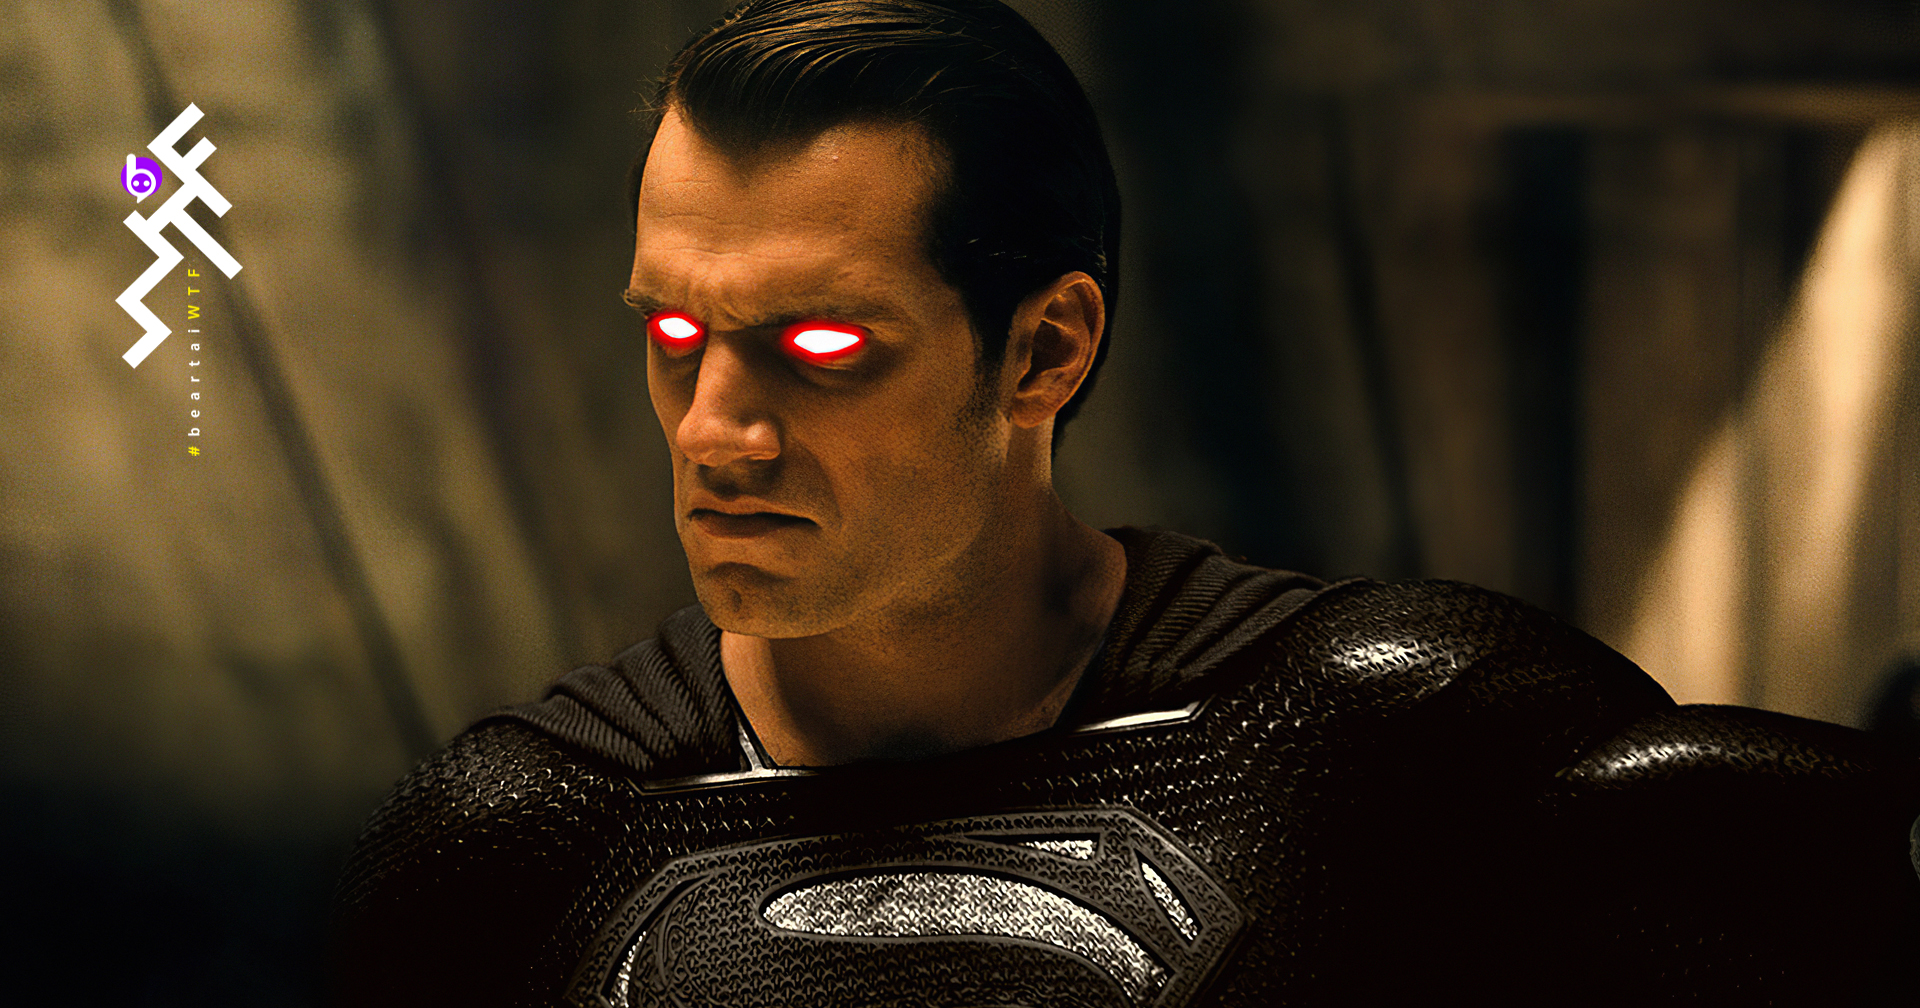 Zack Snyder โชว์คลิป Black Superman ที่จะอยู่ใน Justice League ฉบับ Snyder’s Cut